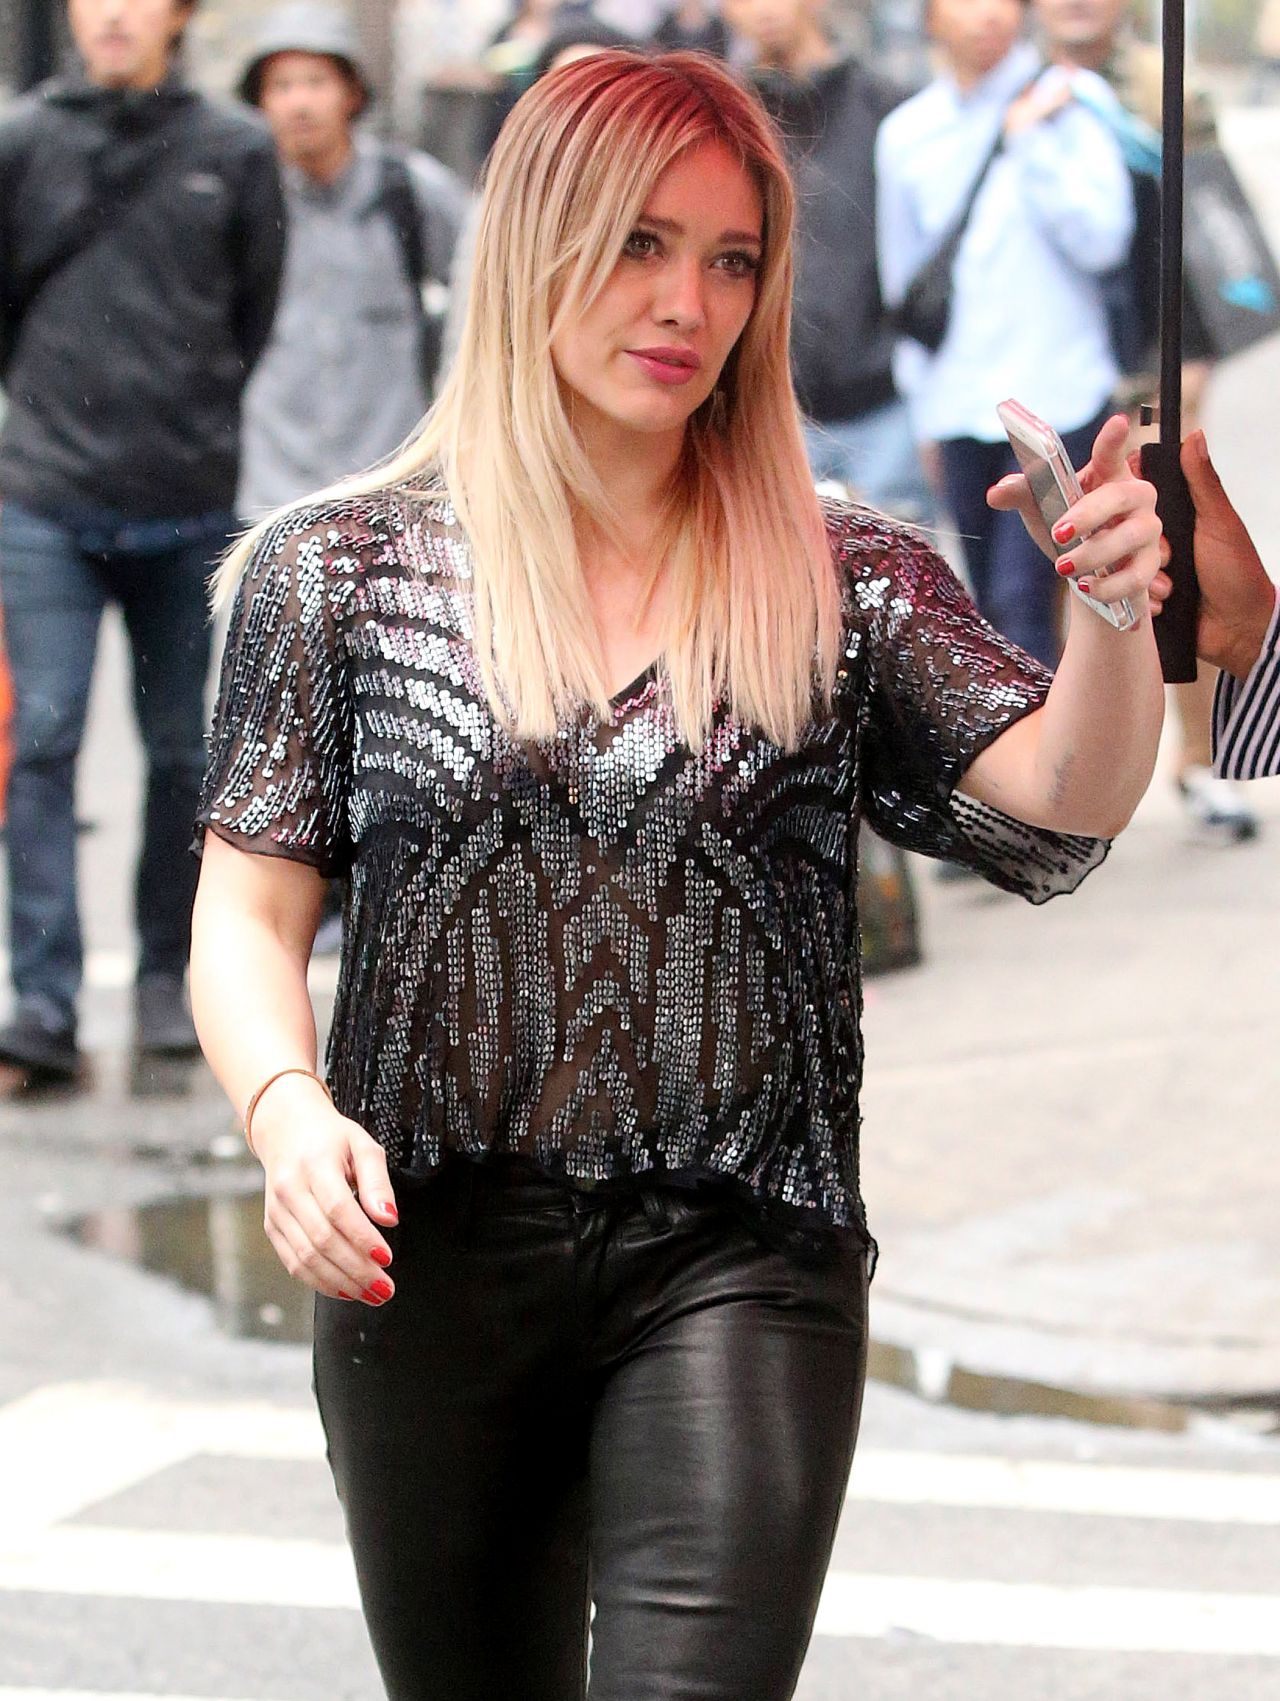 Hilary Duff - 'Younger' Set Photos - New York City, November 2015